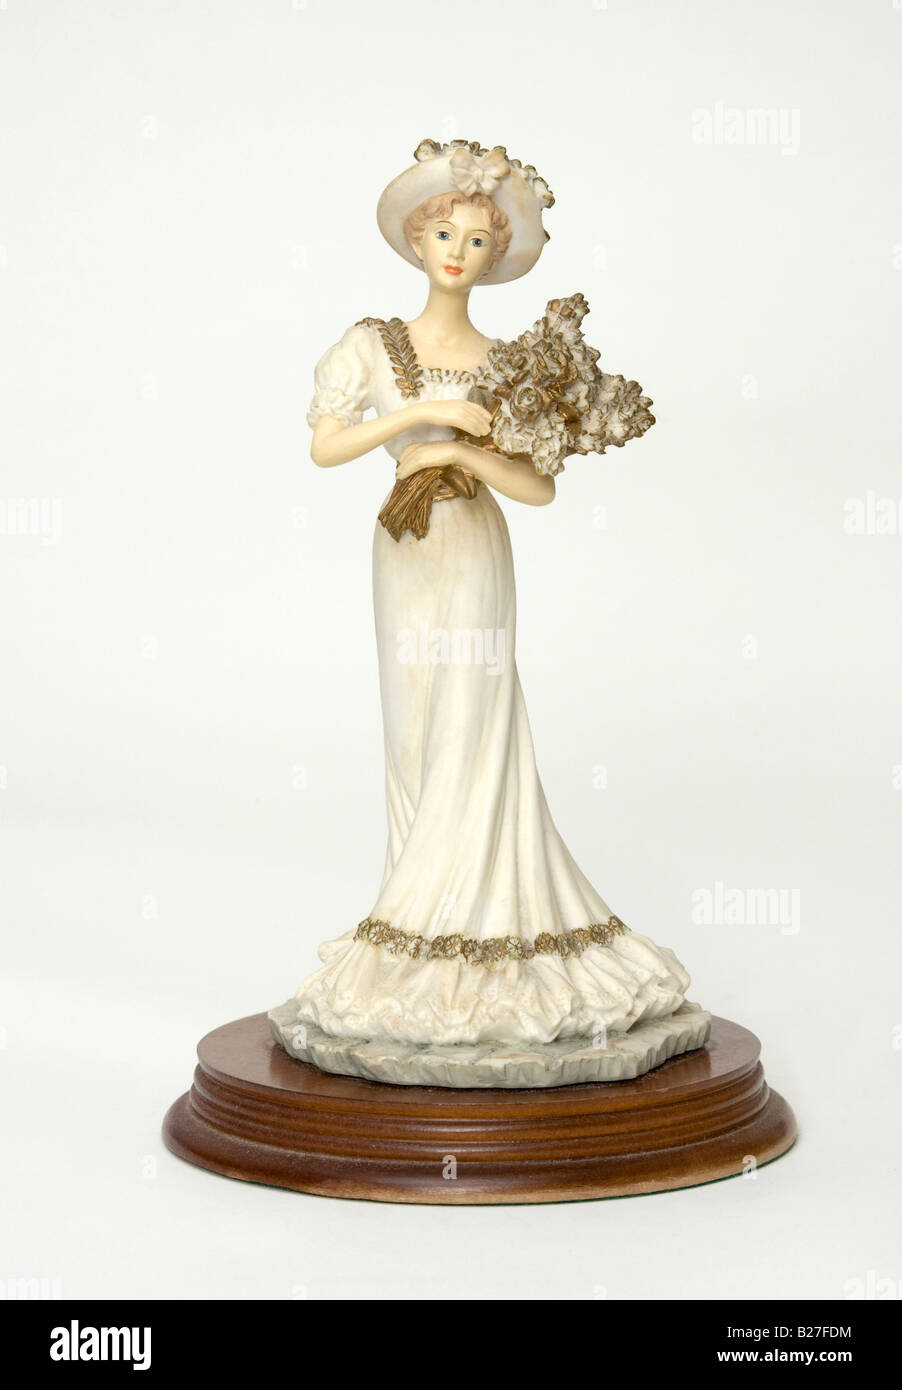 figurine of a woman Stock Photo